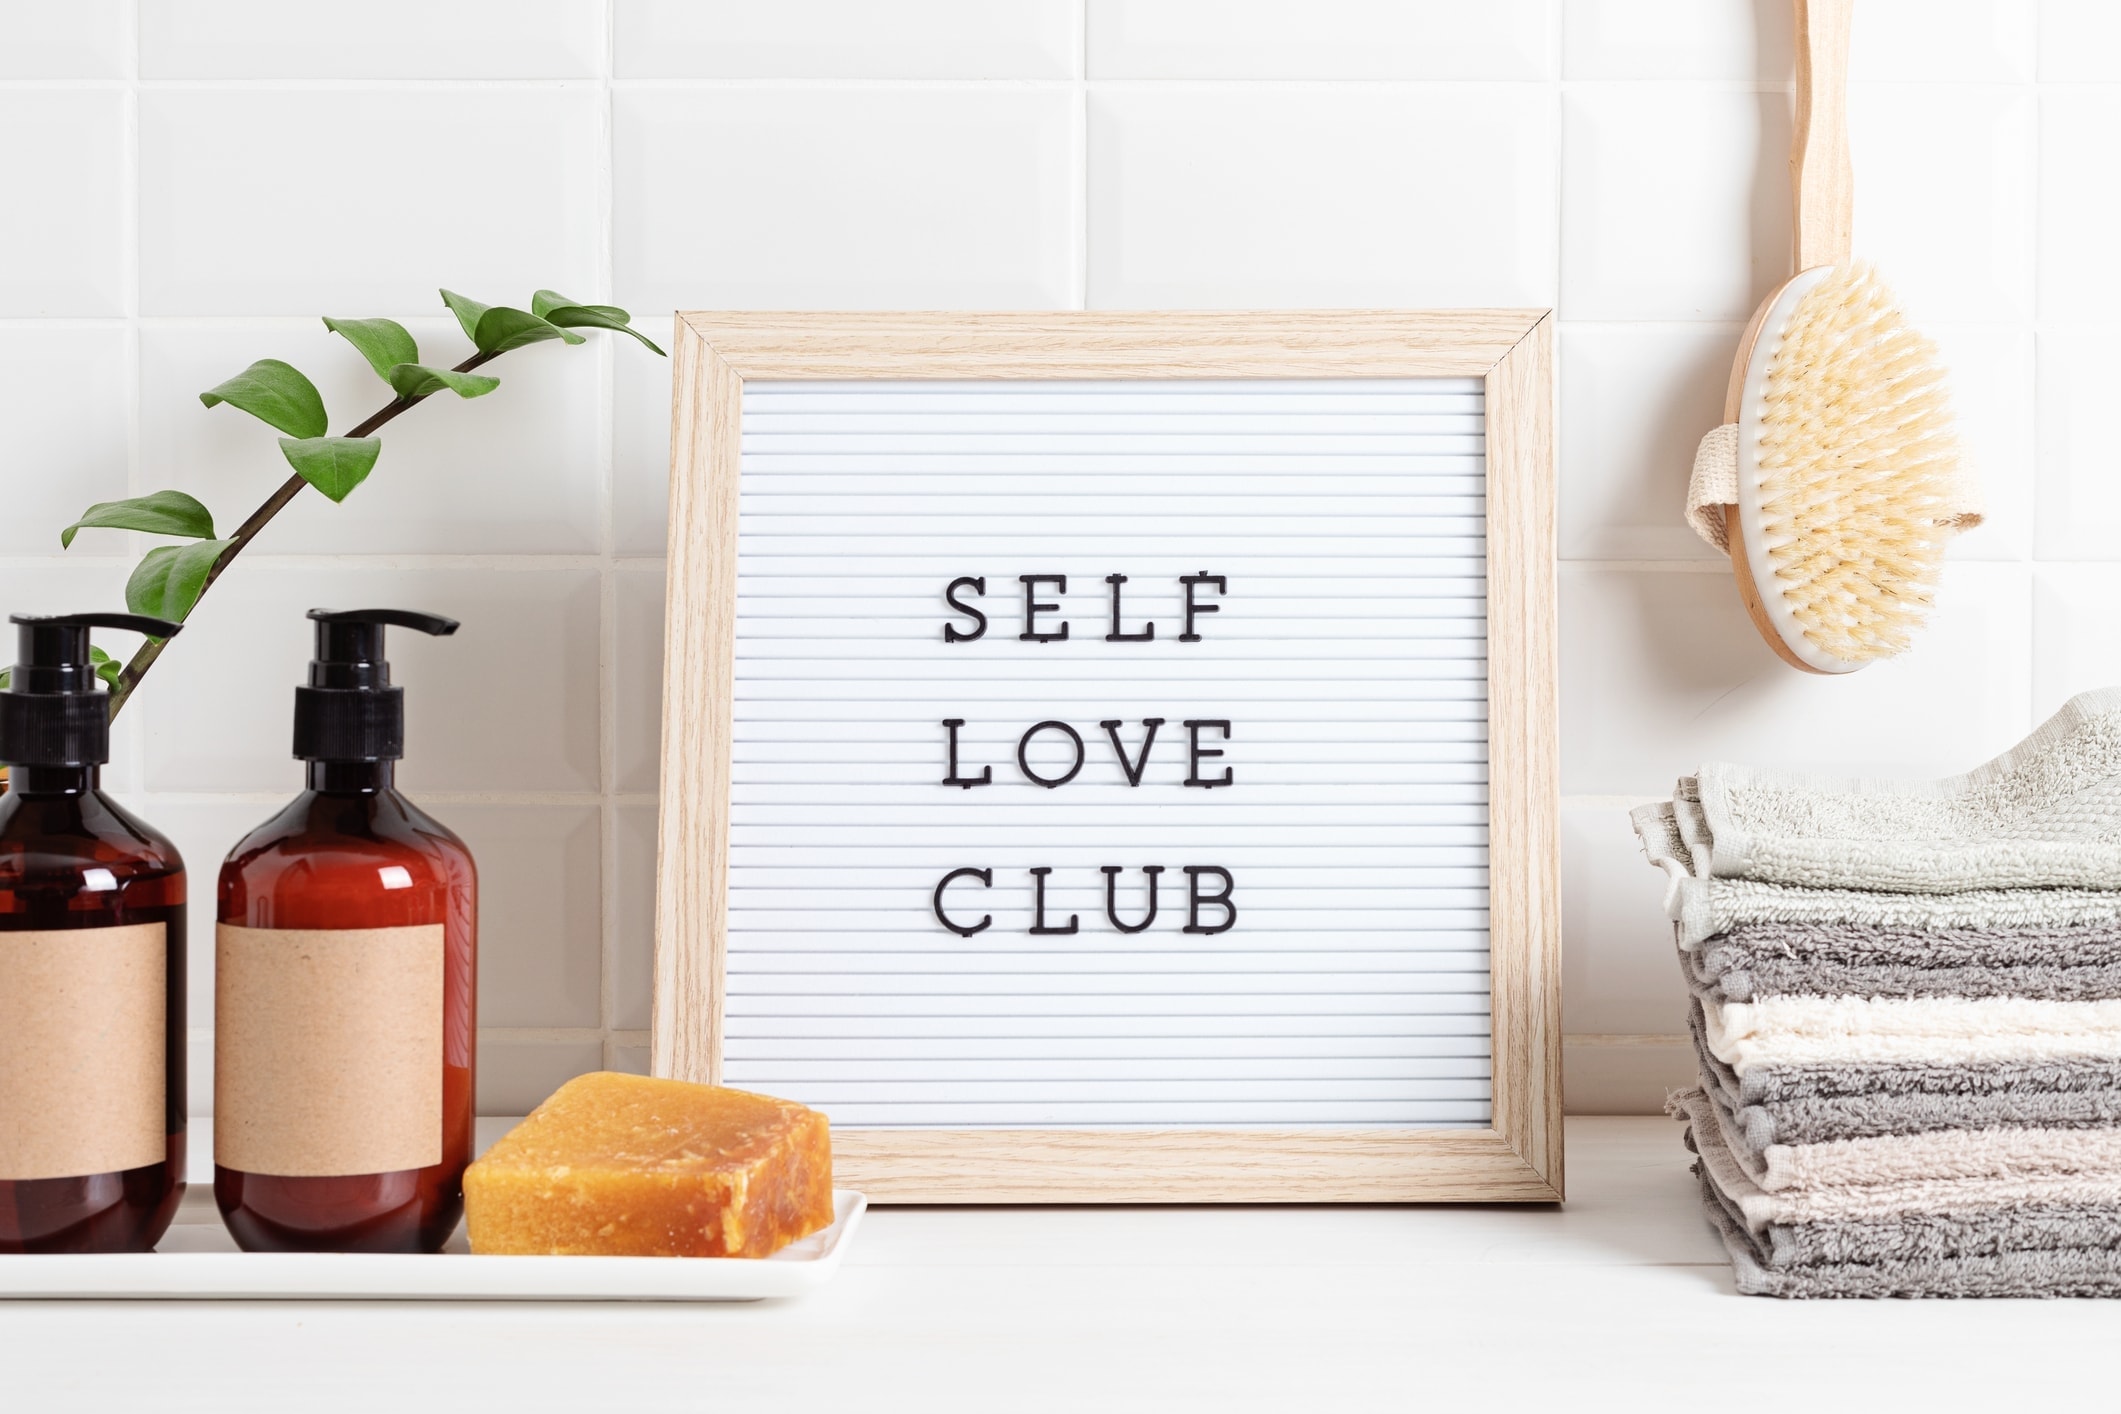 Bathroom sign with self love club on it